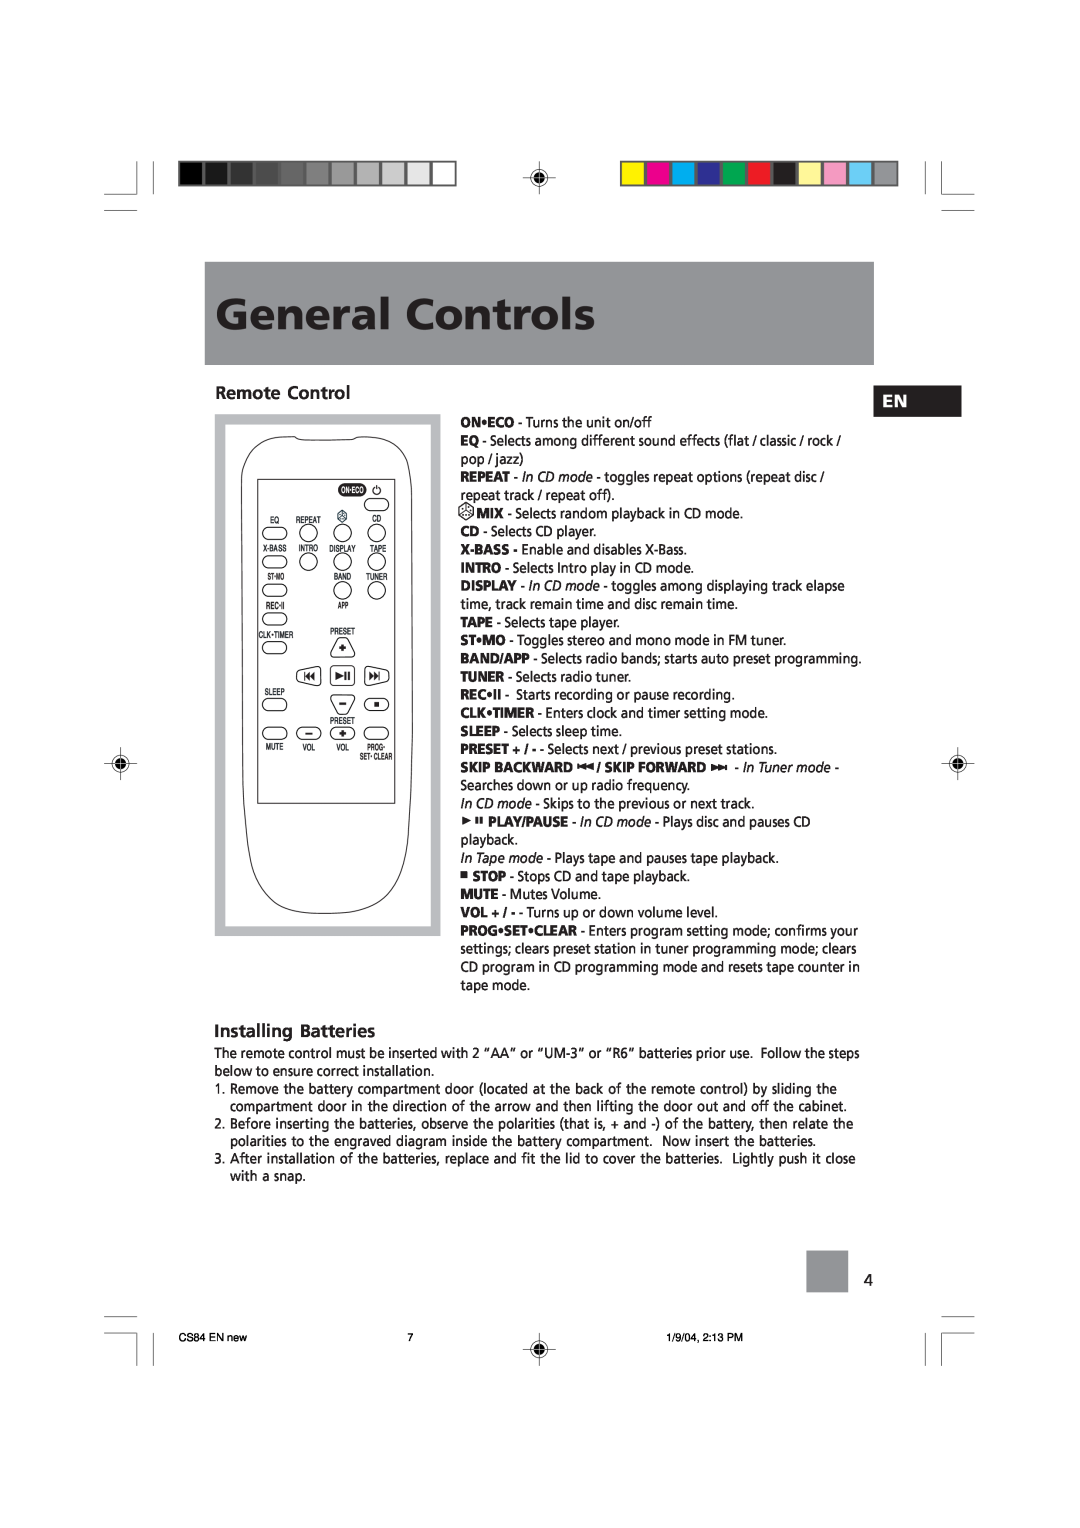 Technicolor - Thomson CS84 manual Remote Control, Installing Batteries, General Controls 